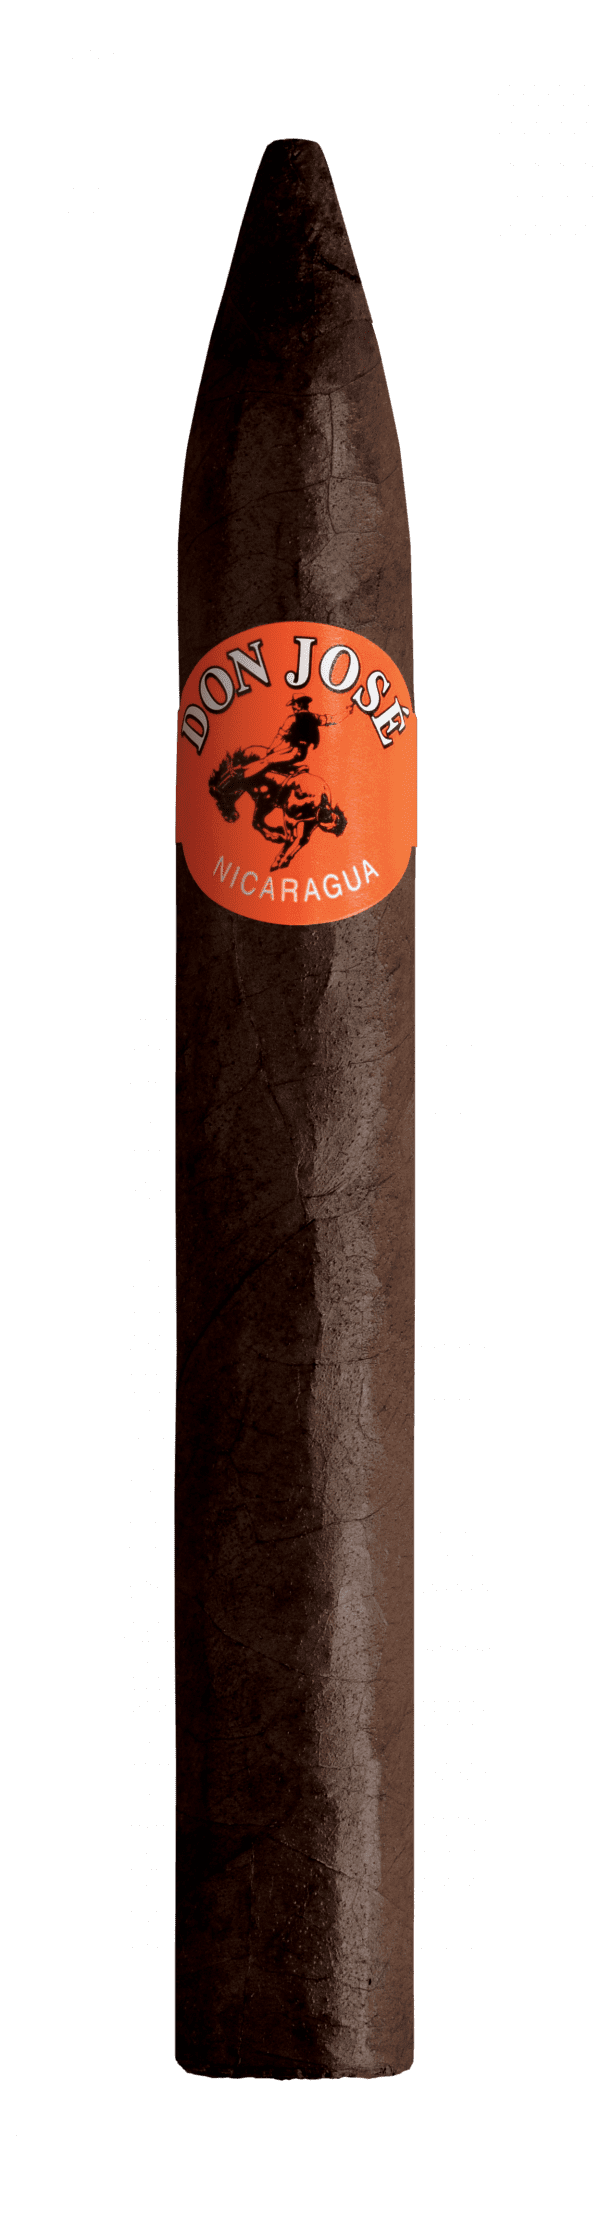 Single Don Jose Torpedo cigar